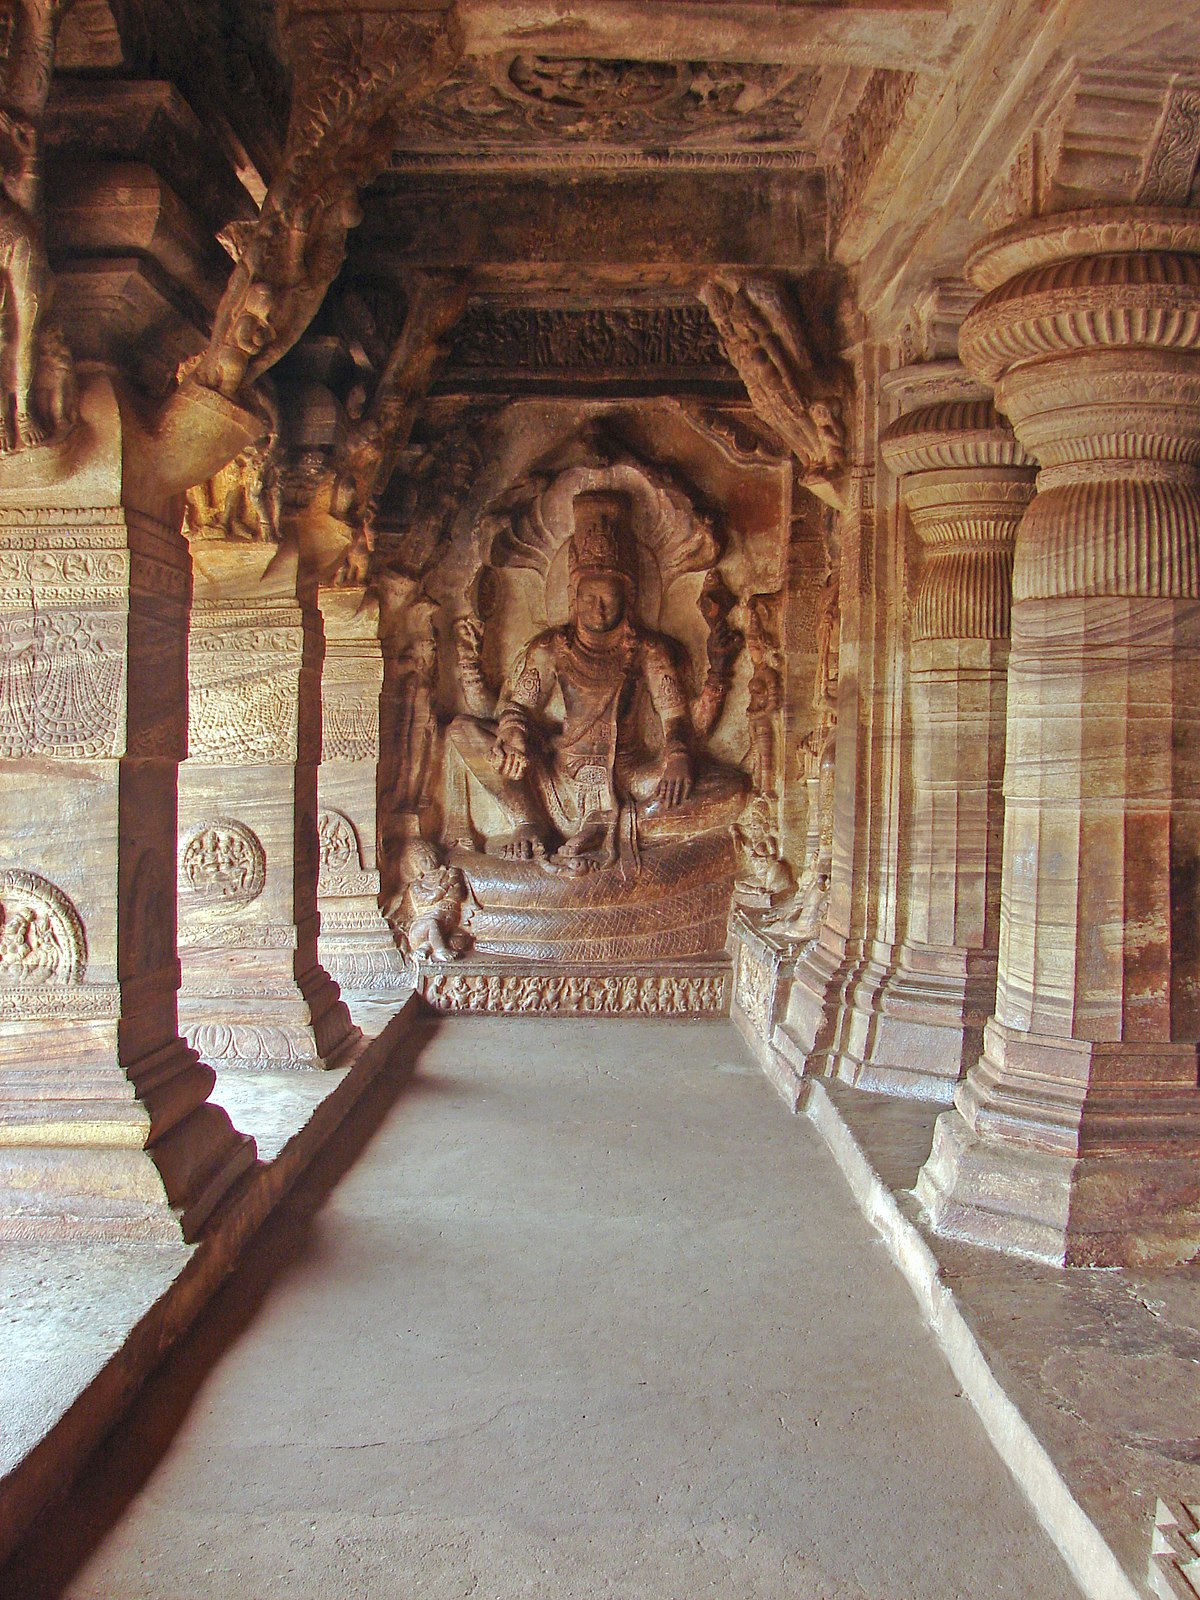 Vishnu Image inside cave number in badami Caves